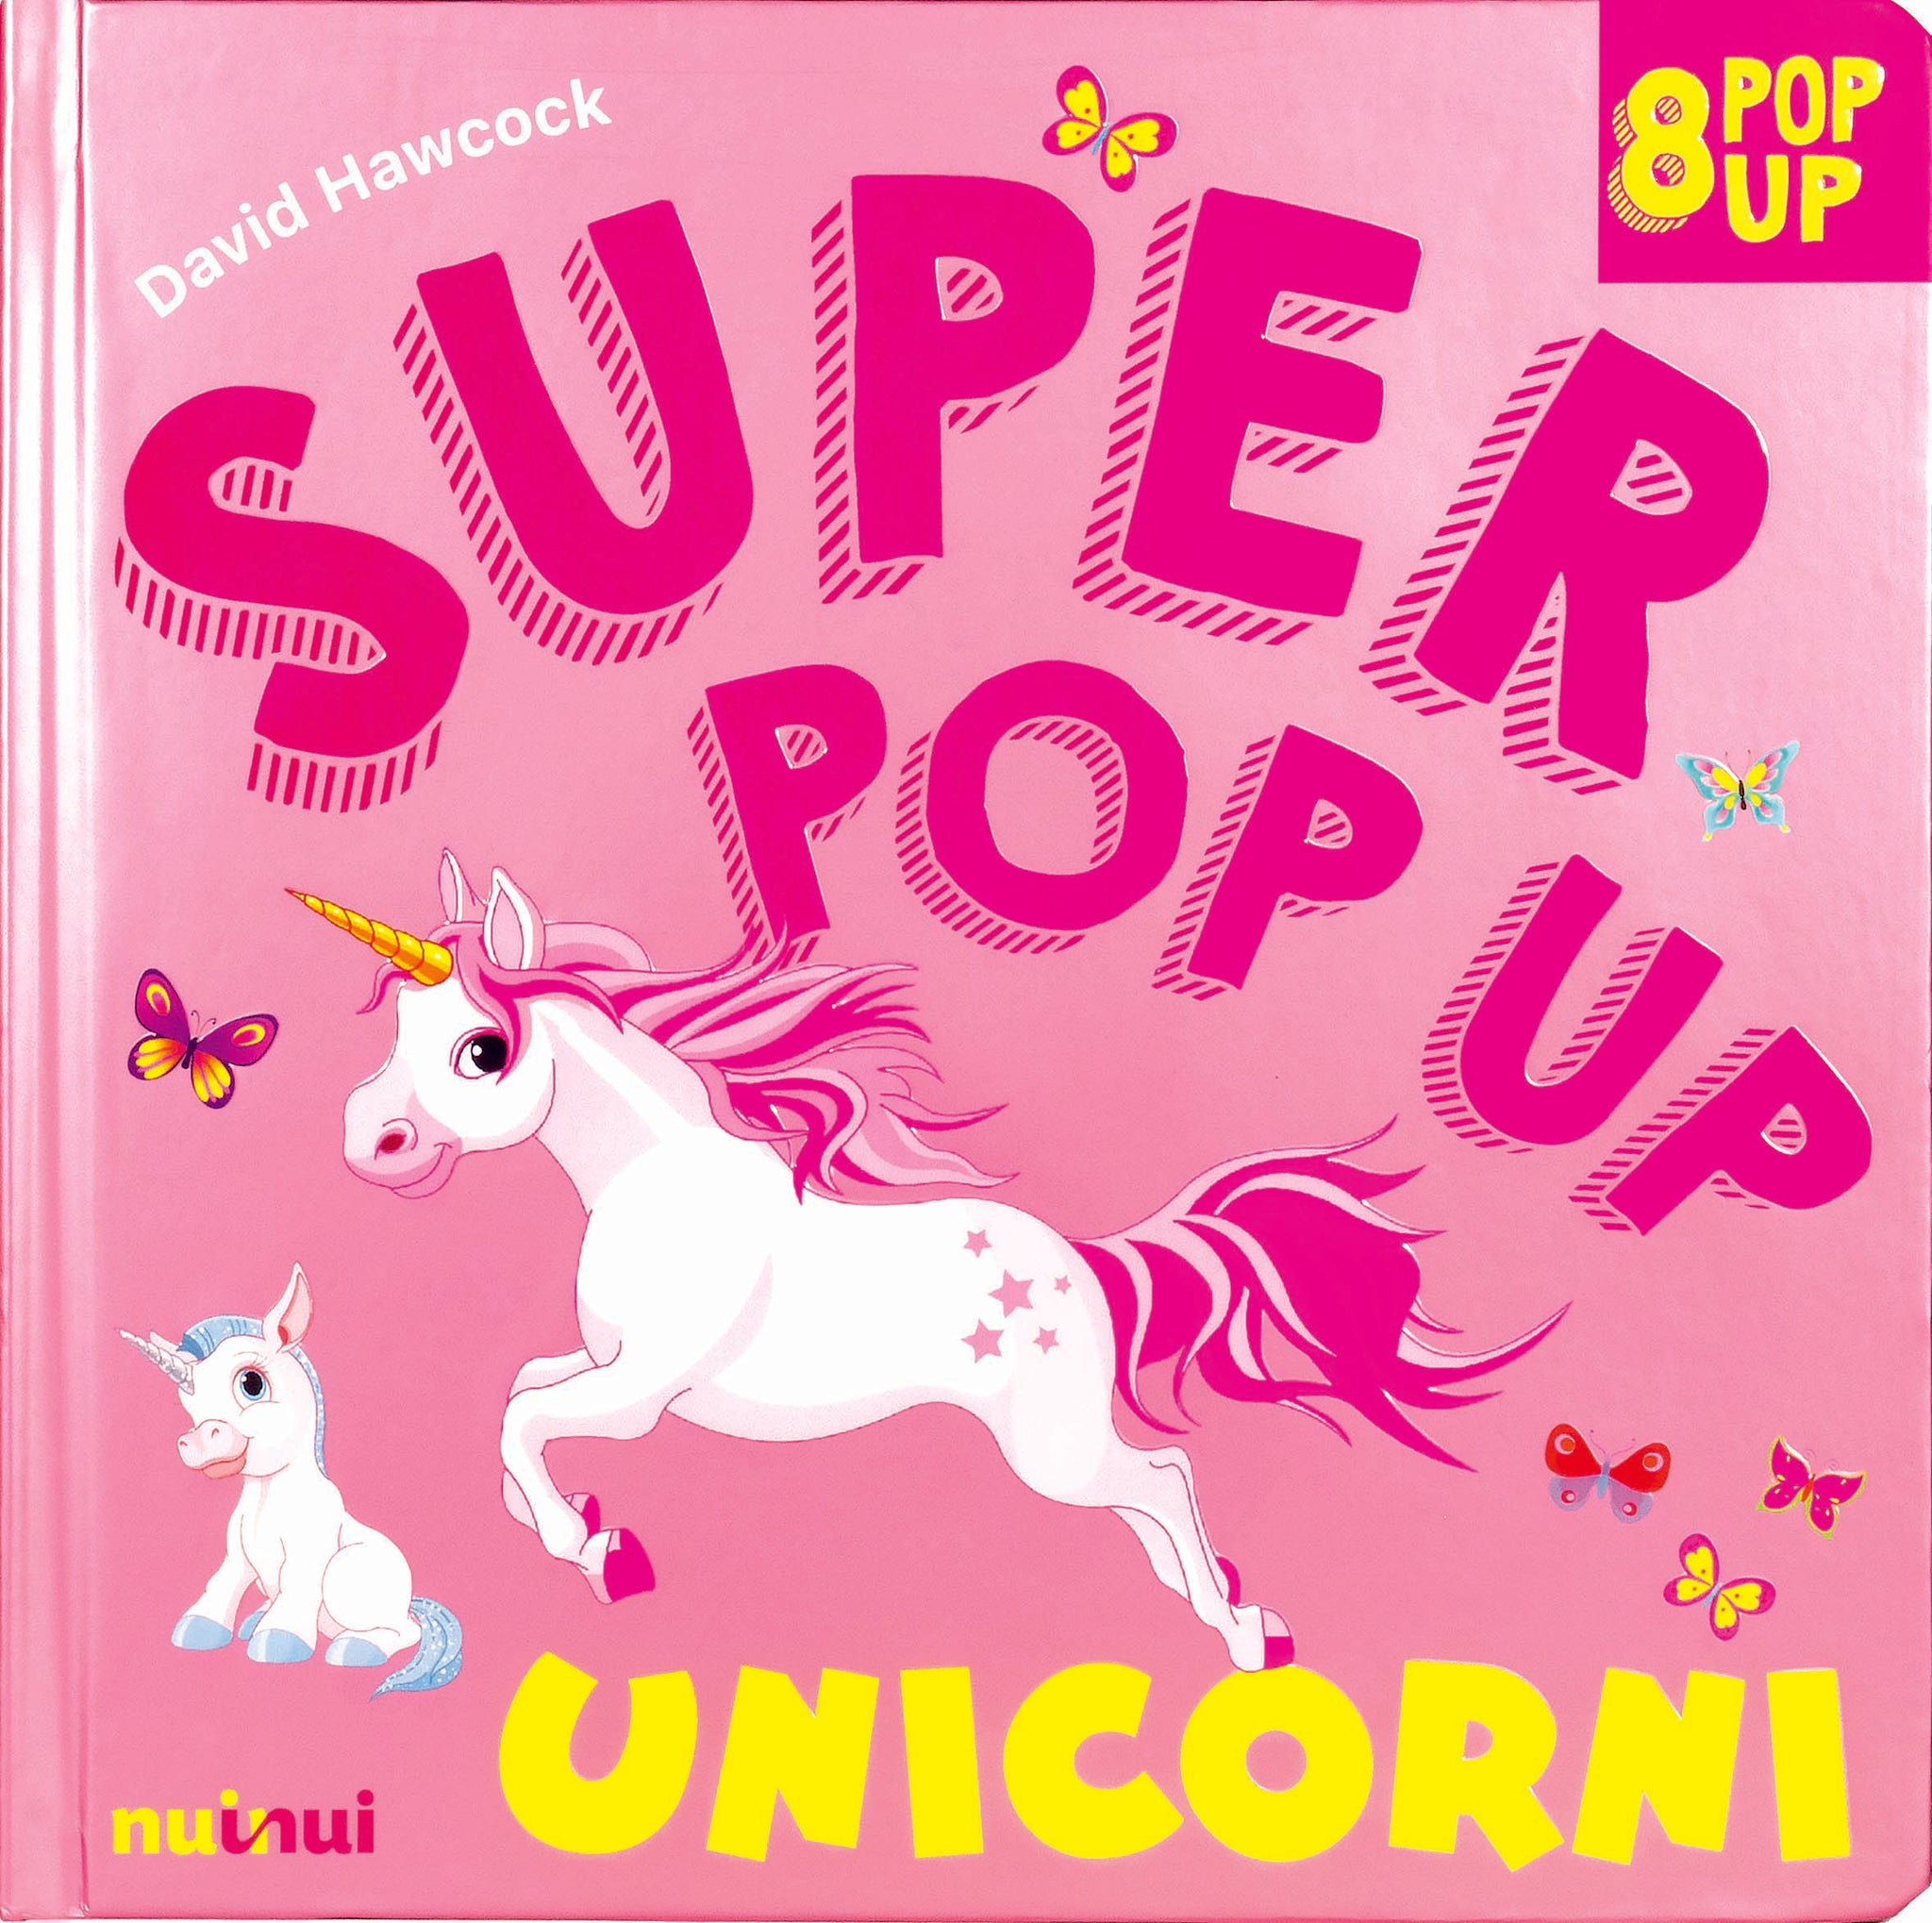 Super pop up - Unicorni